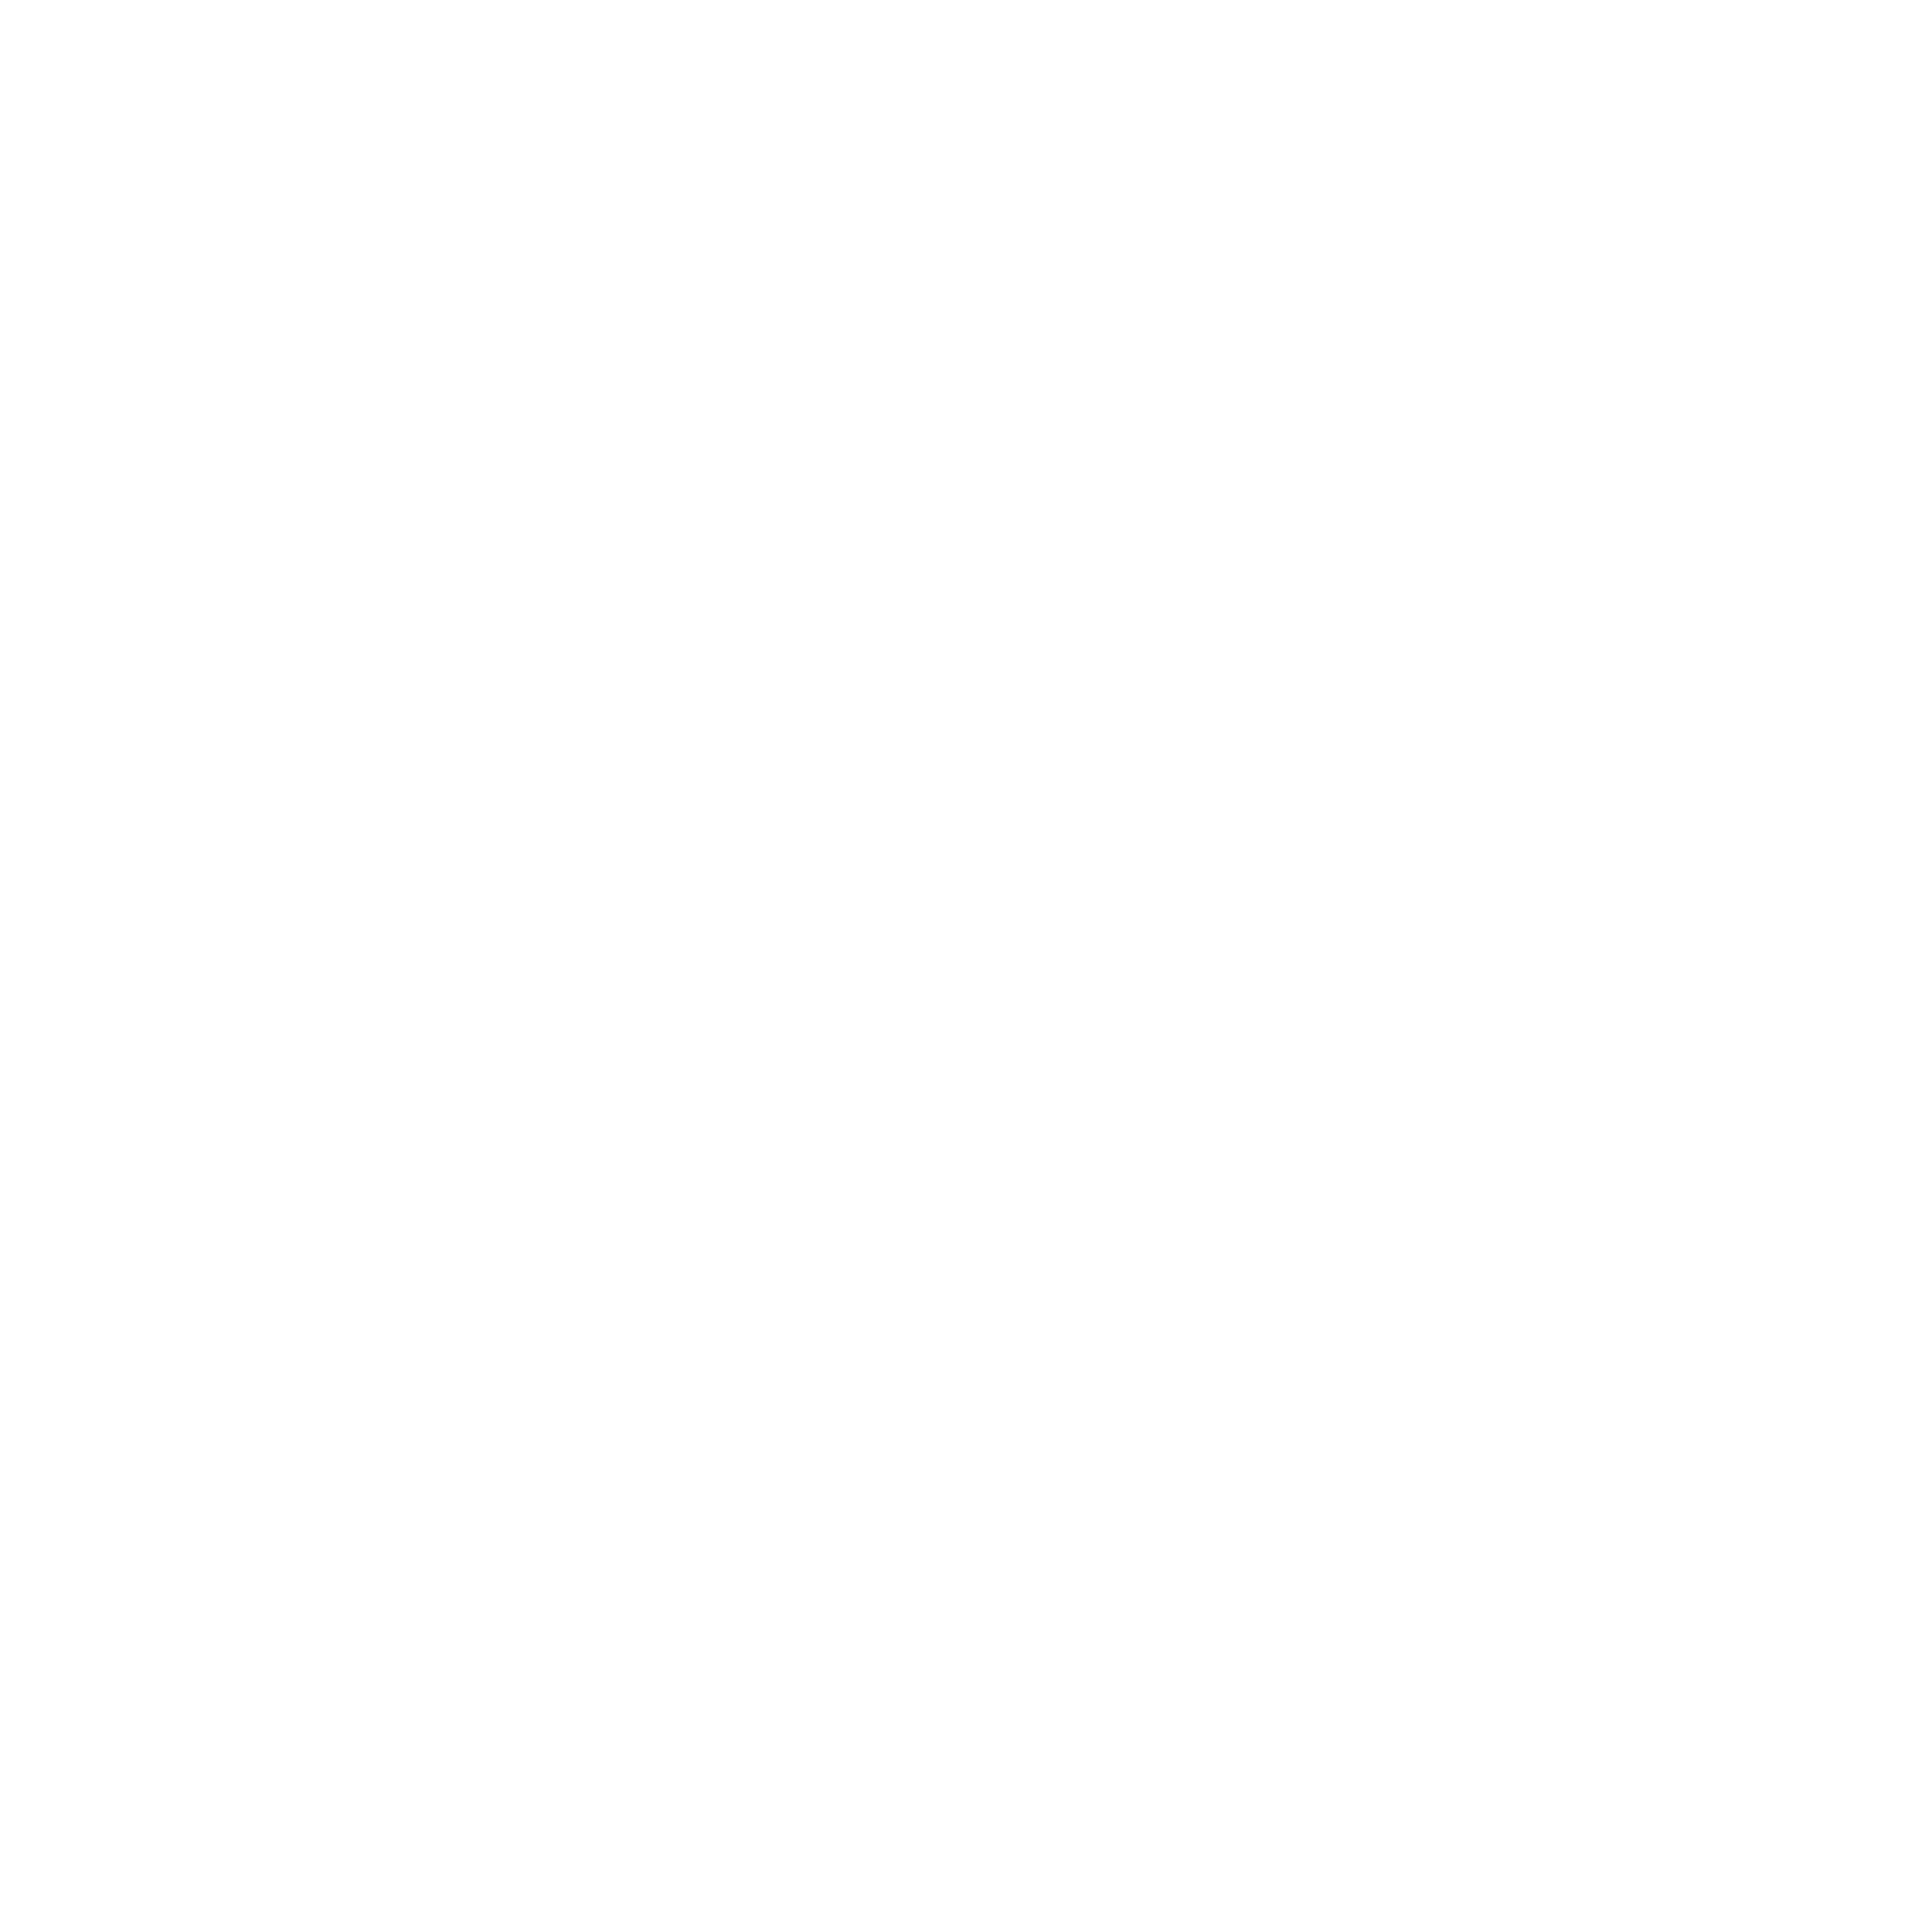 Cocktail bar crc Repetto